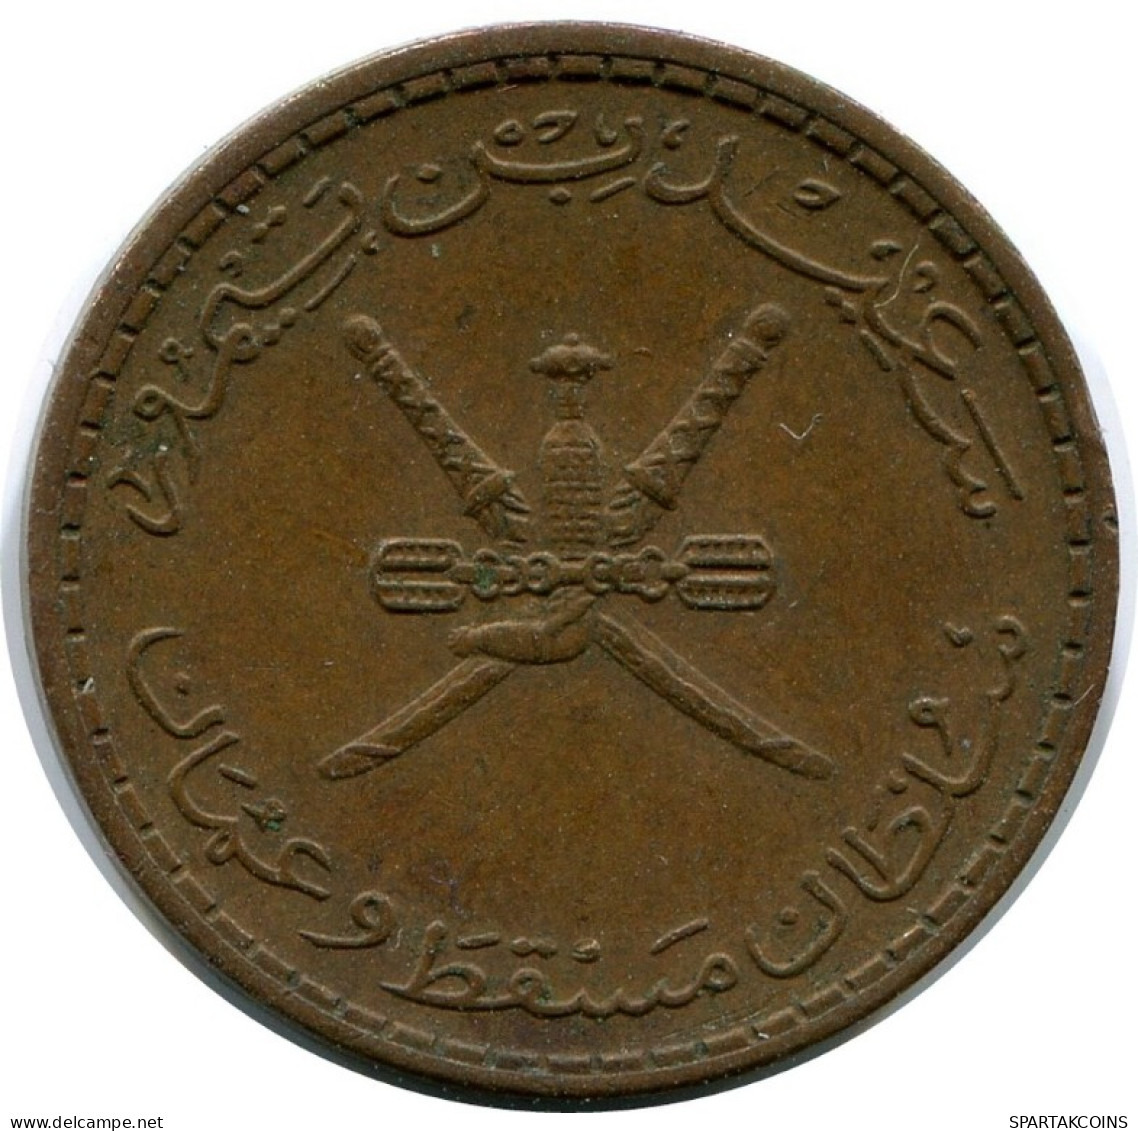 5 BAISA 1970 MUSCAT Y OMÁN MUSCAT AND OMÁN OMAN Islámico Moneda #AK247.E.A - Oman